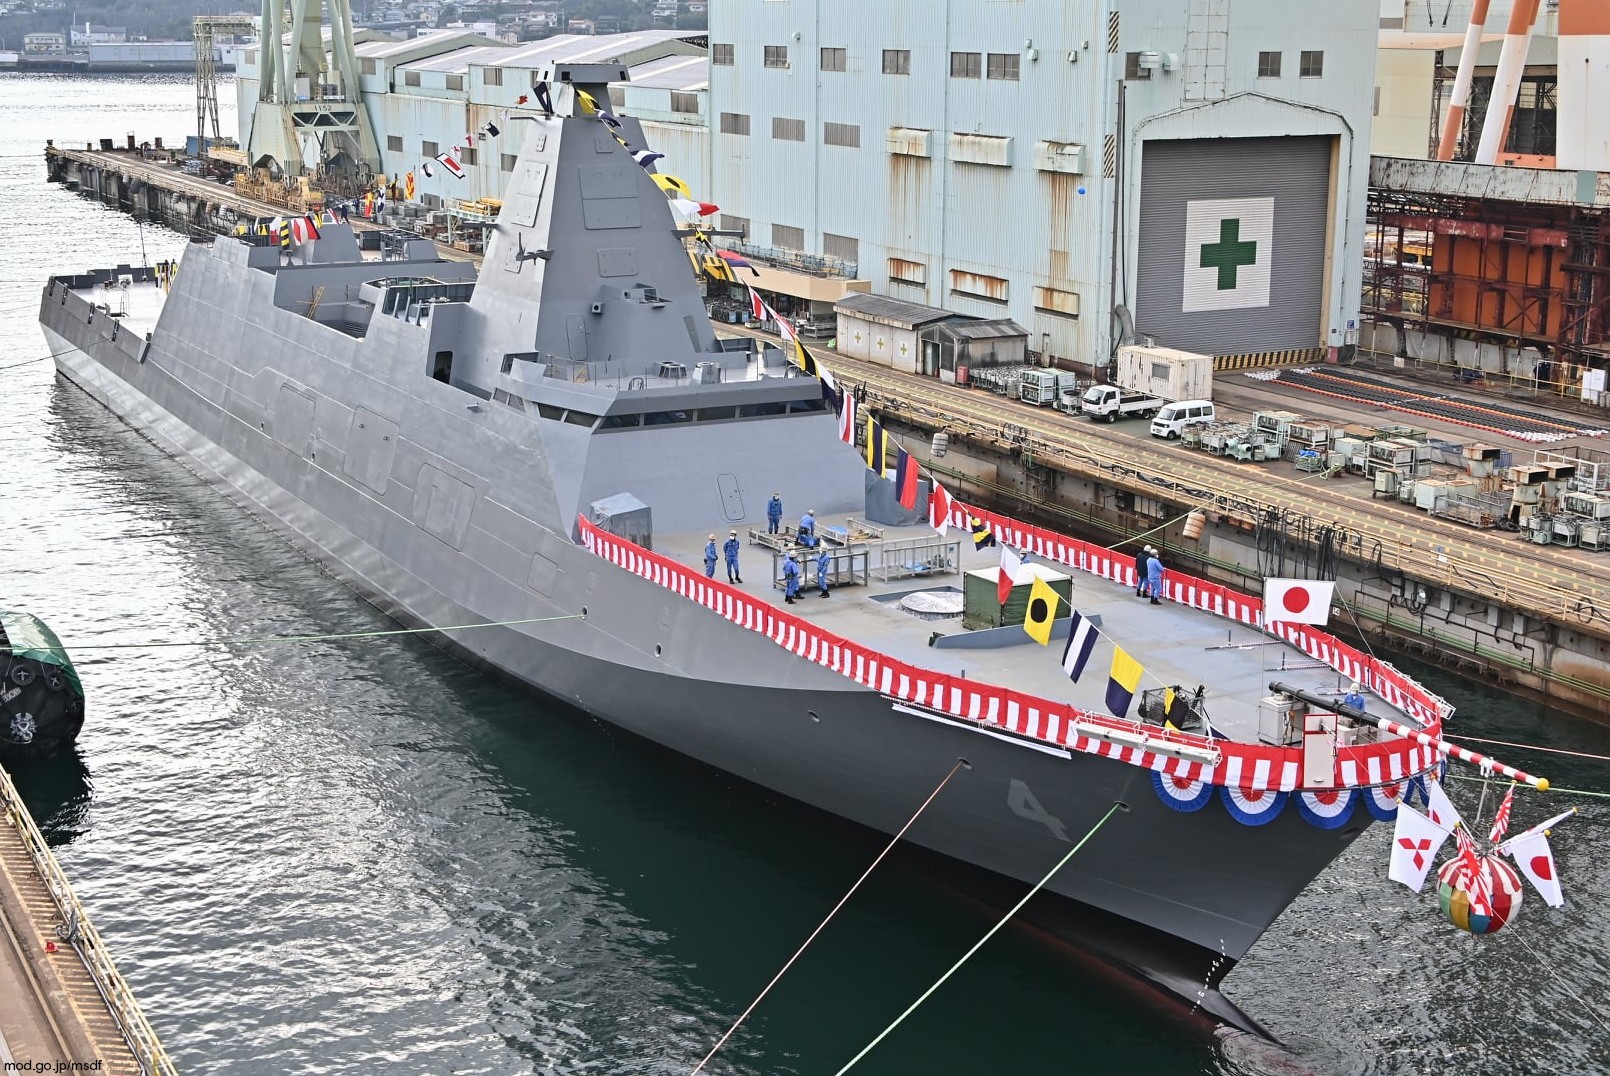 ffm-4 js mikuma mogami class frigate multi-mission japan maritime self defense force jmsdf navy 02